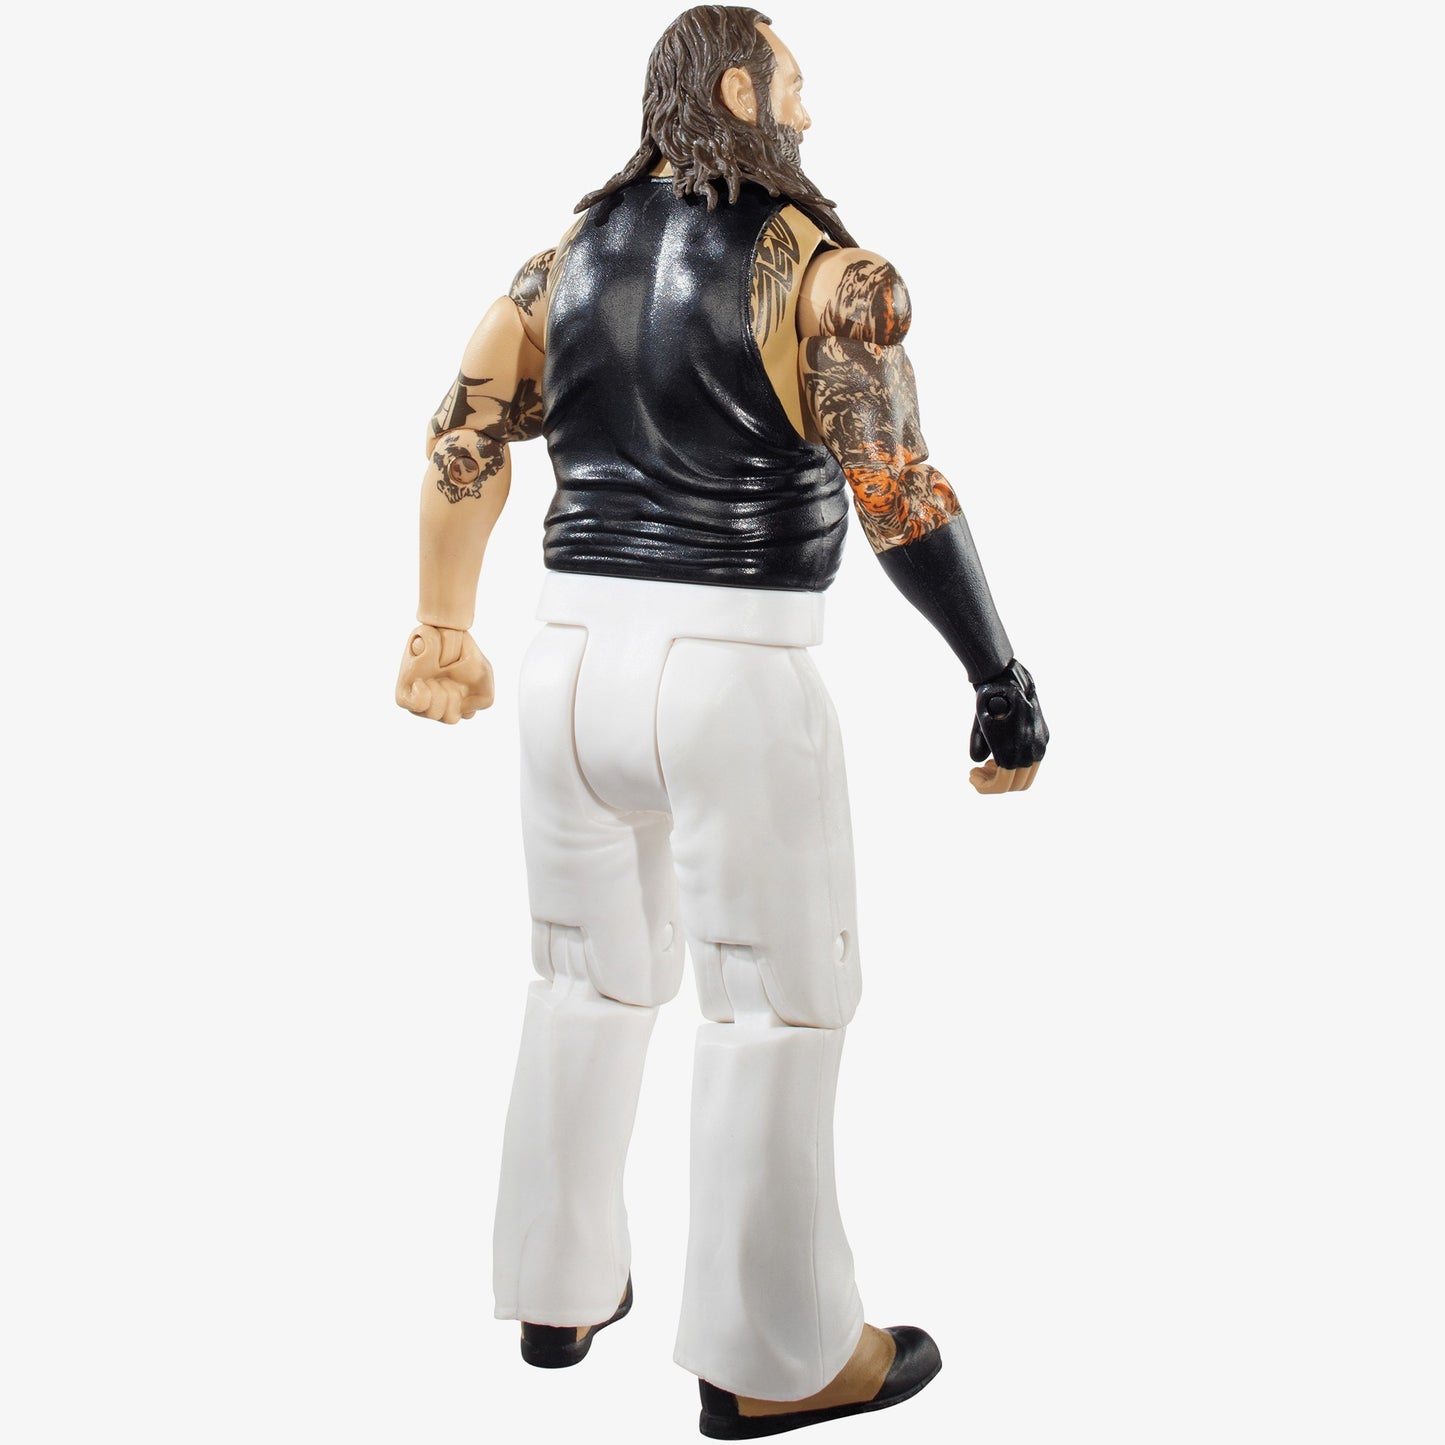 Bray Wyatt - WWE Basic Series #59